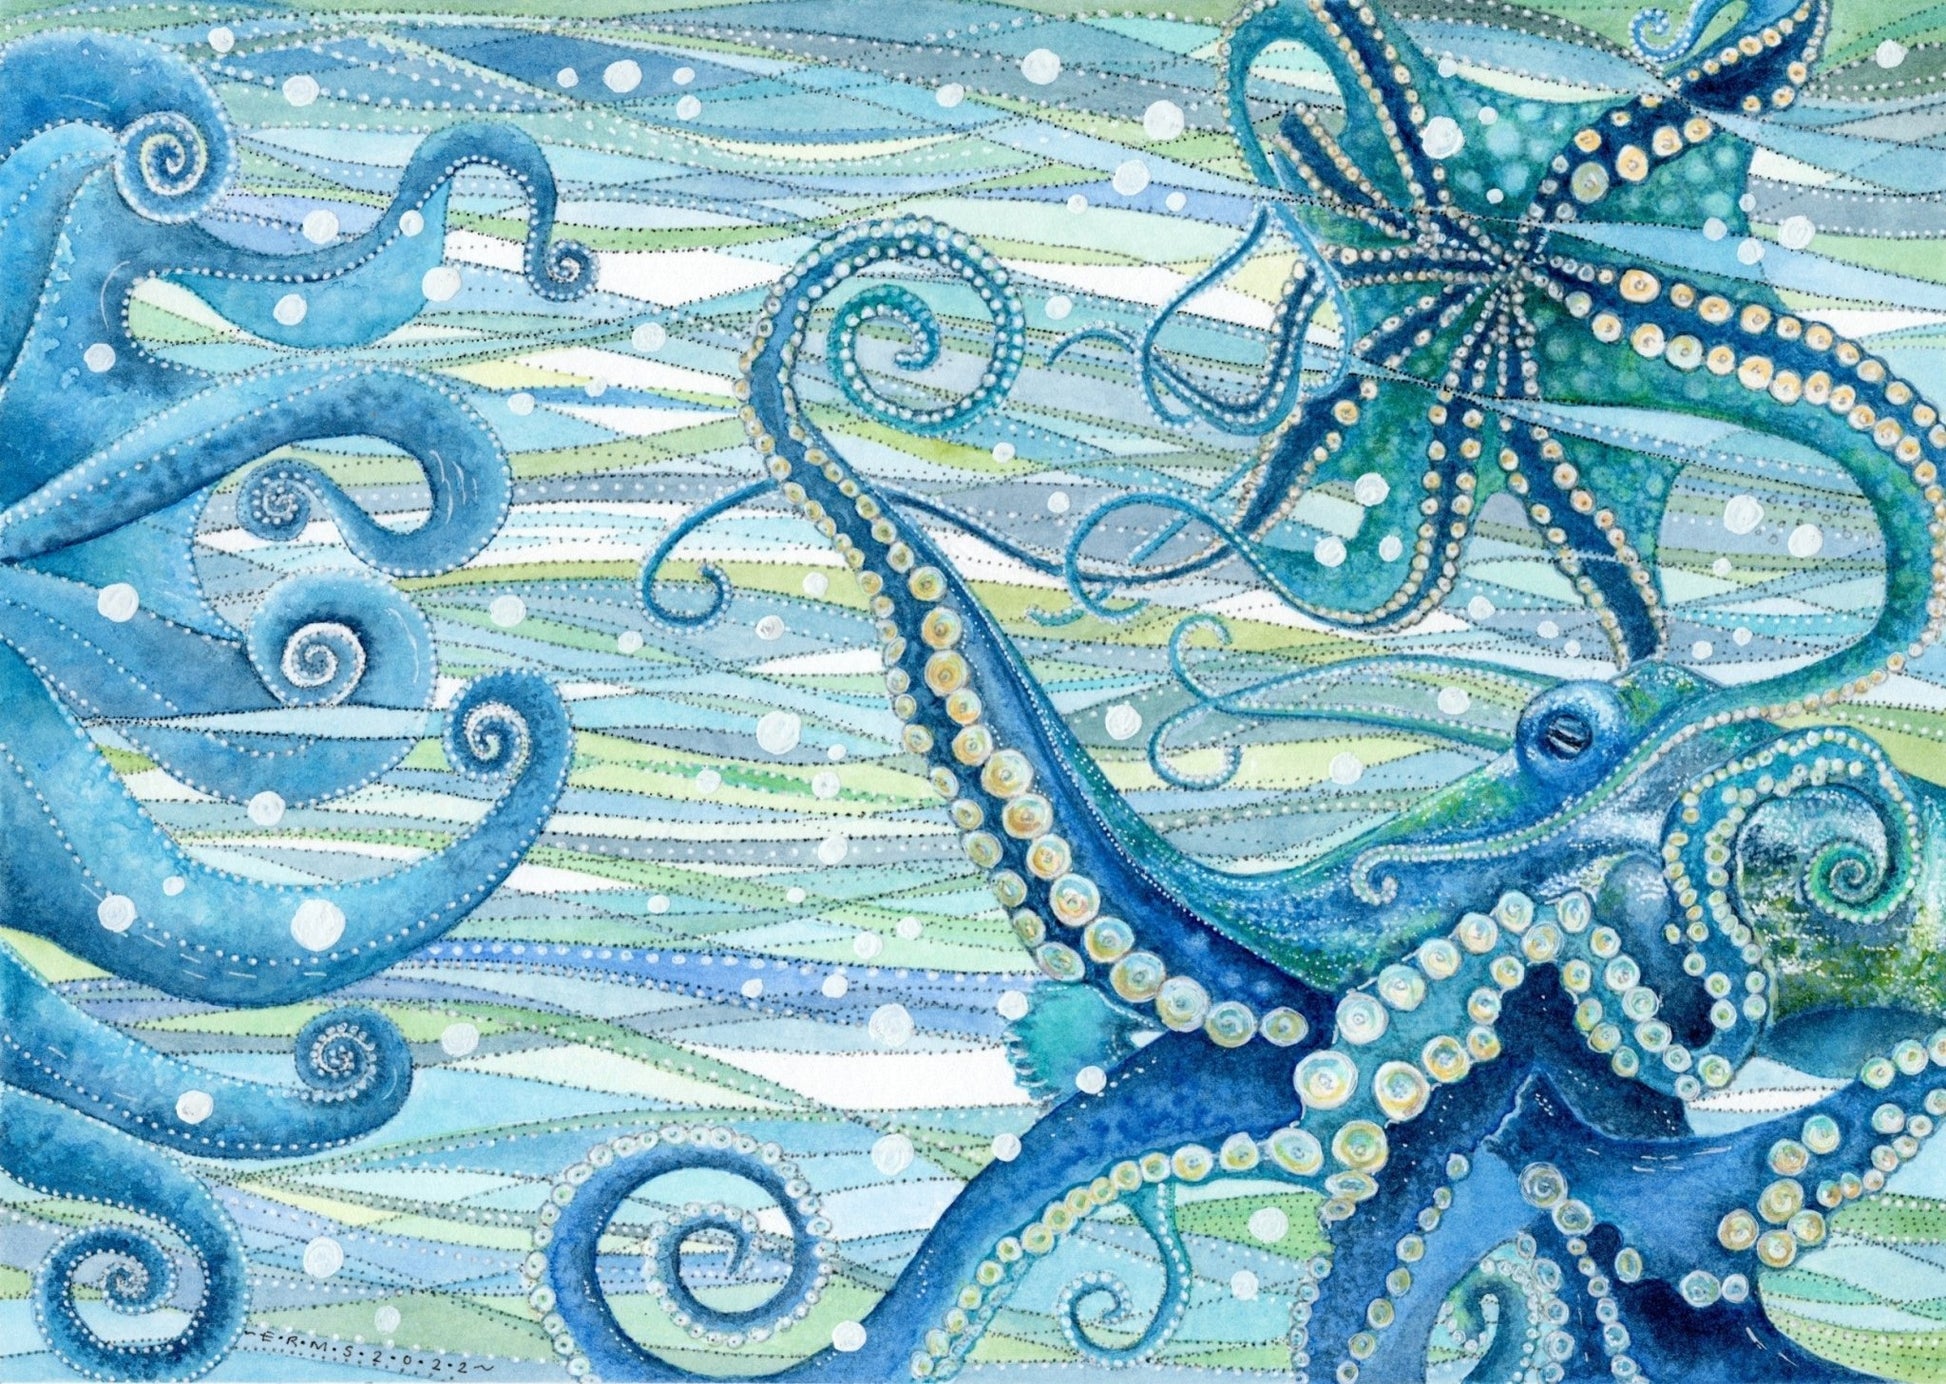 Octopus - Seaside Jigsaw Puzzle 1000 pieces - Silvery Seas - Coastal Art by Elizabeth Stocker - East Neuk Beach Crafts